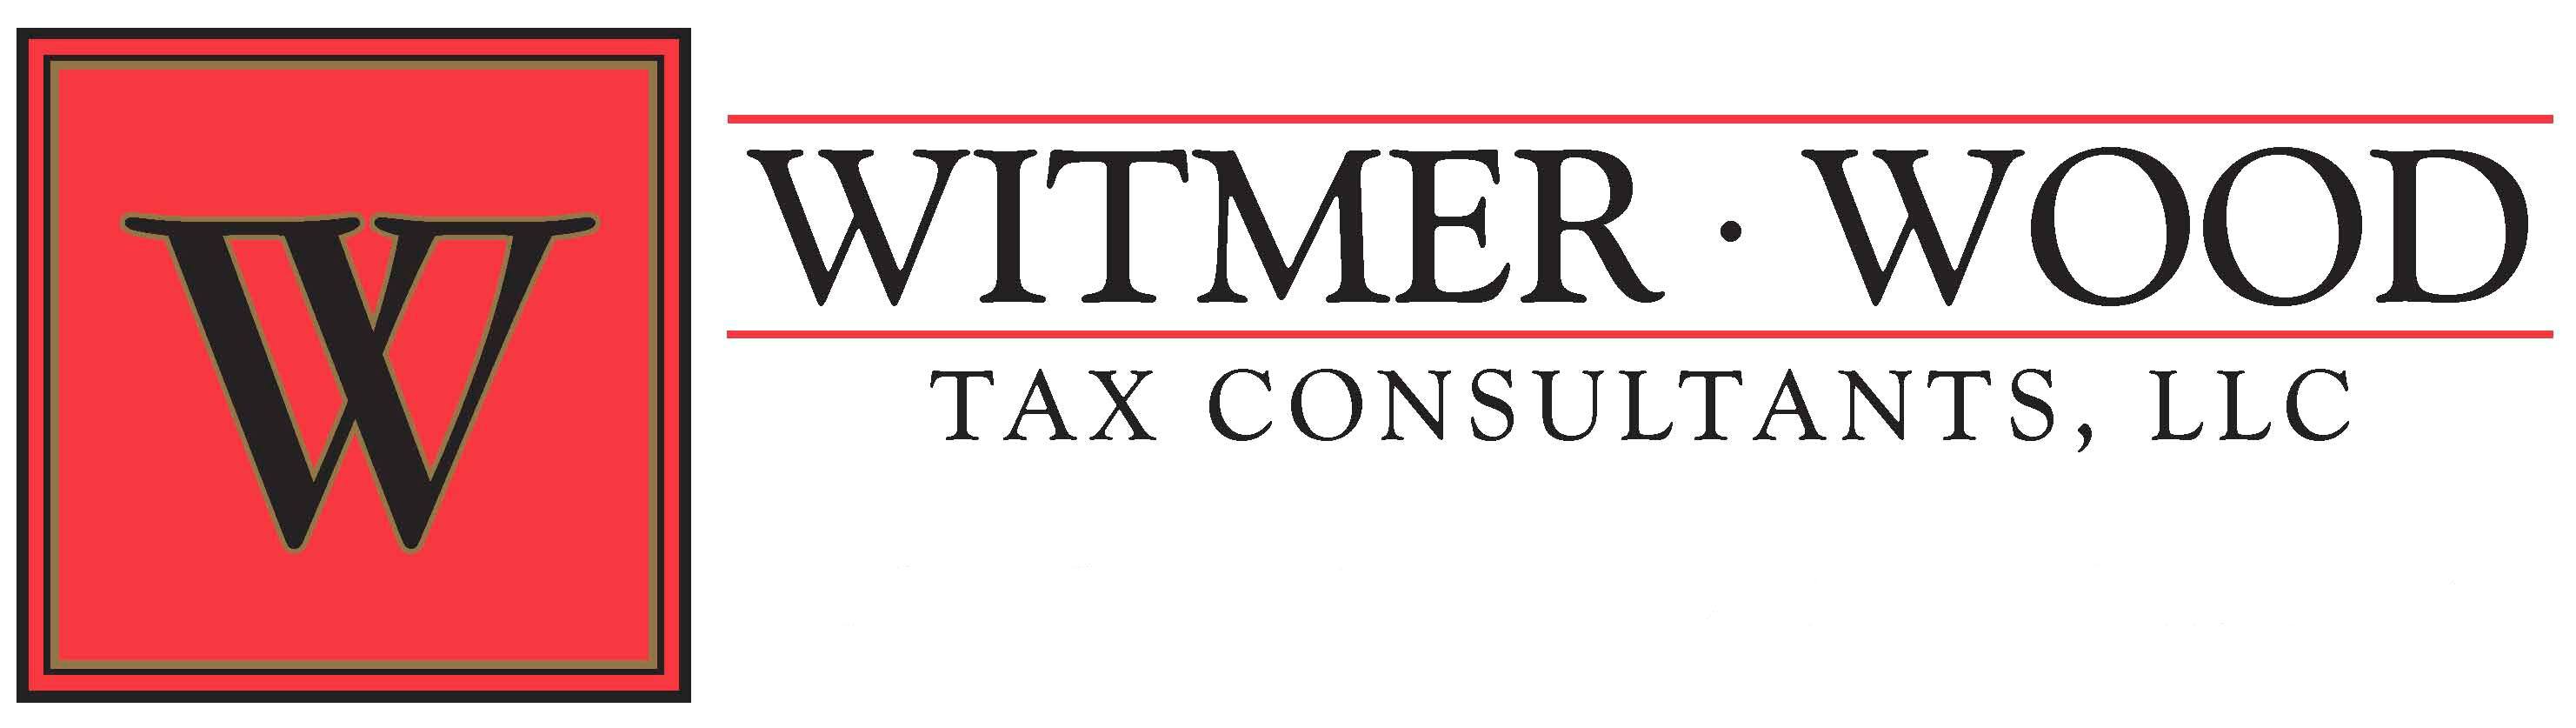 Witmer Wood Tax Consultants, LLC 13631 Leo Rd, Leo Indiana 46765